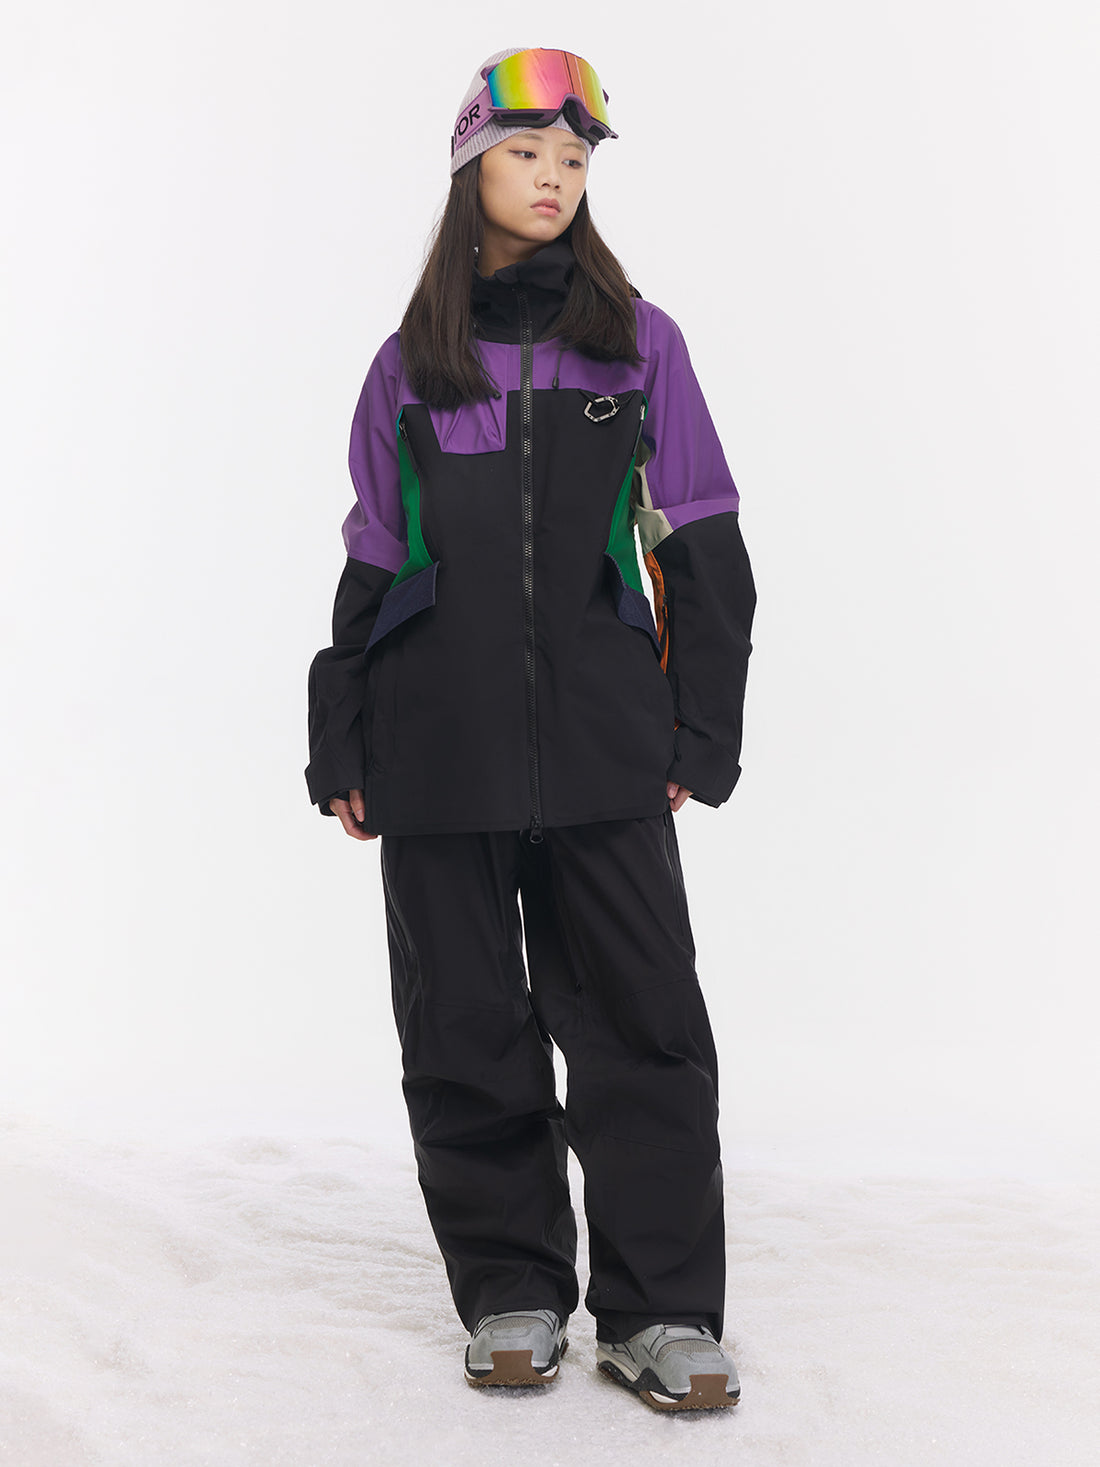 Women's Dermizax 3L Snowshell Long Full-Zip Jacket